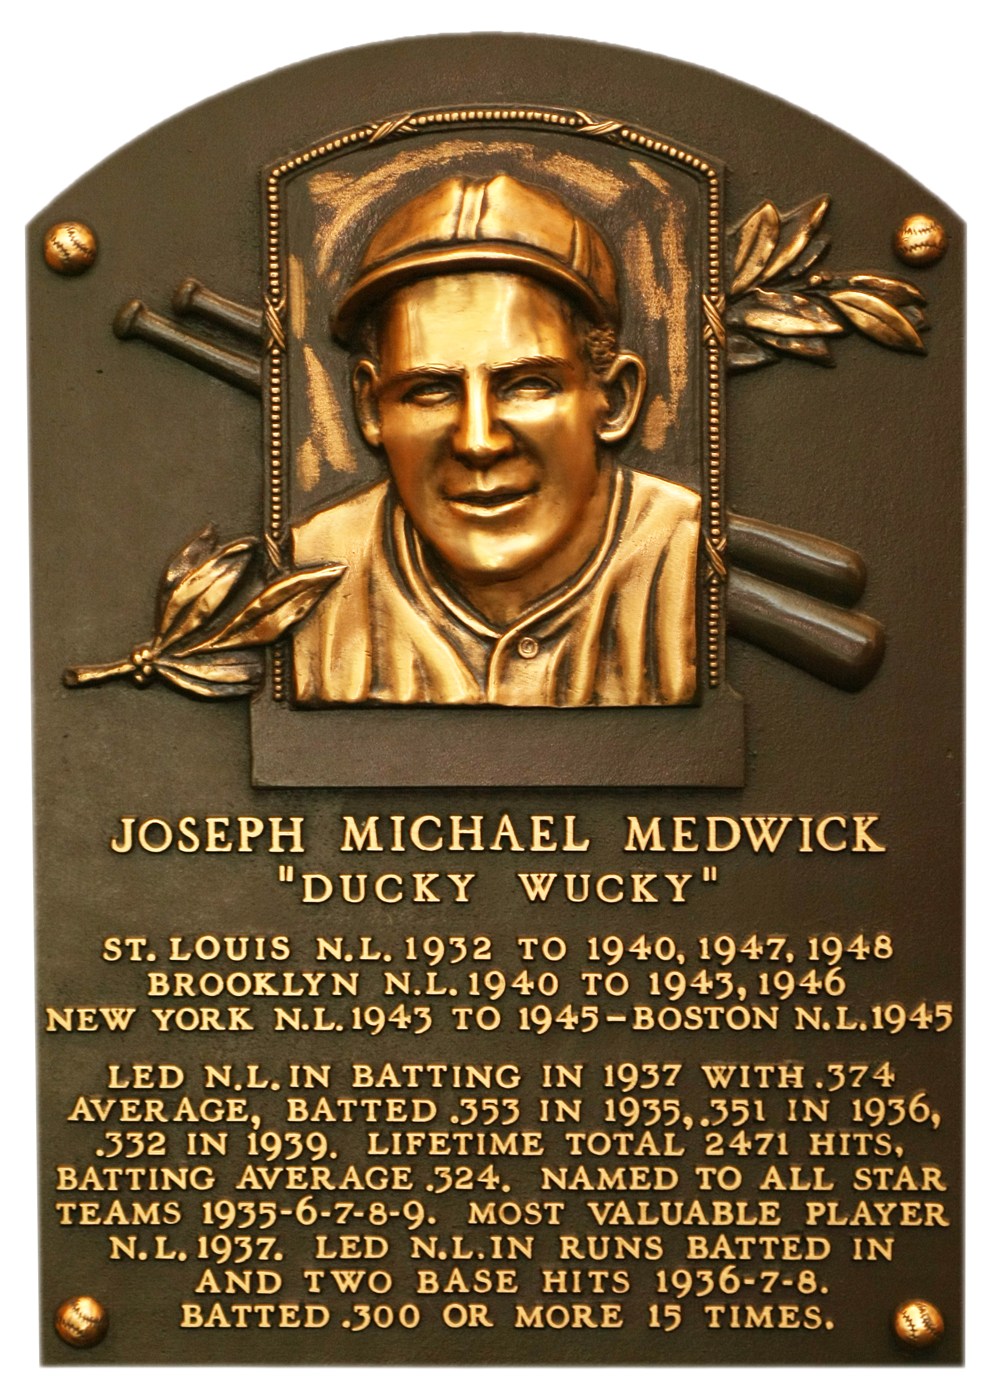 Joe Medwick Hall of Fame plaque